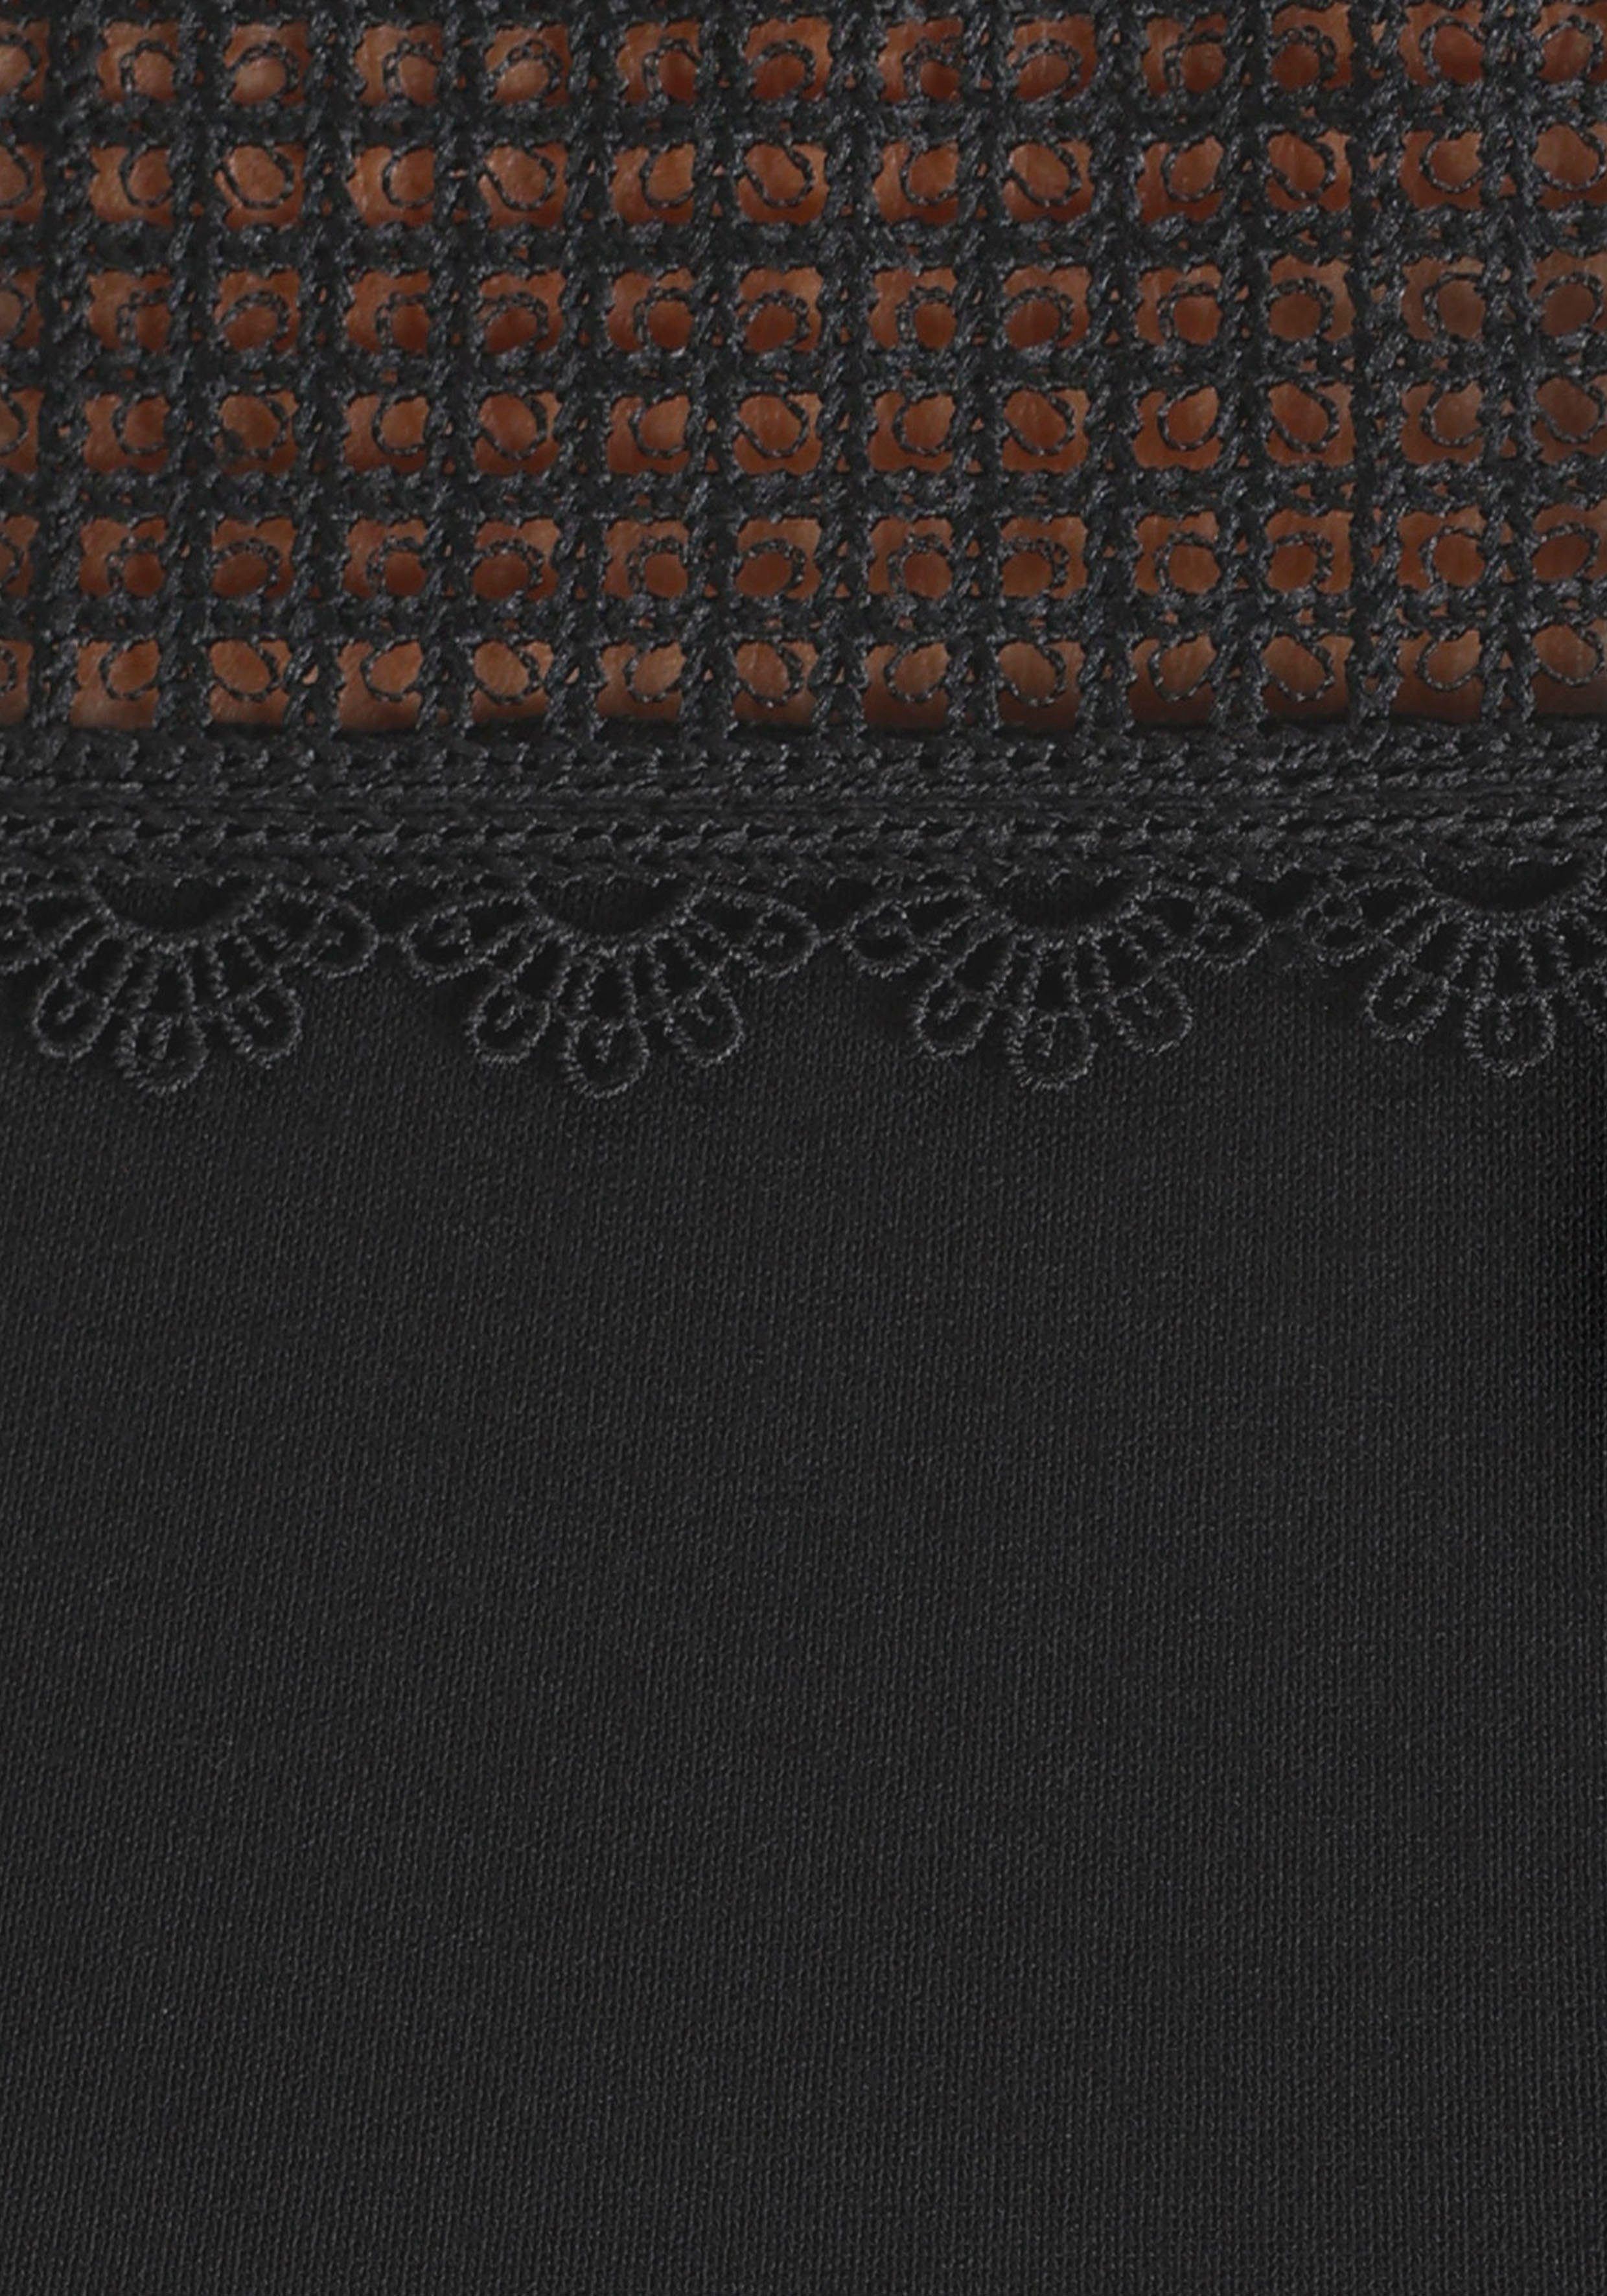 Crochet-Einsatz Melrose Netzshirt mit